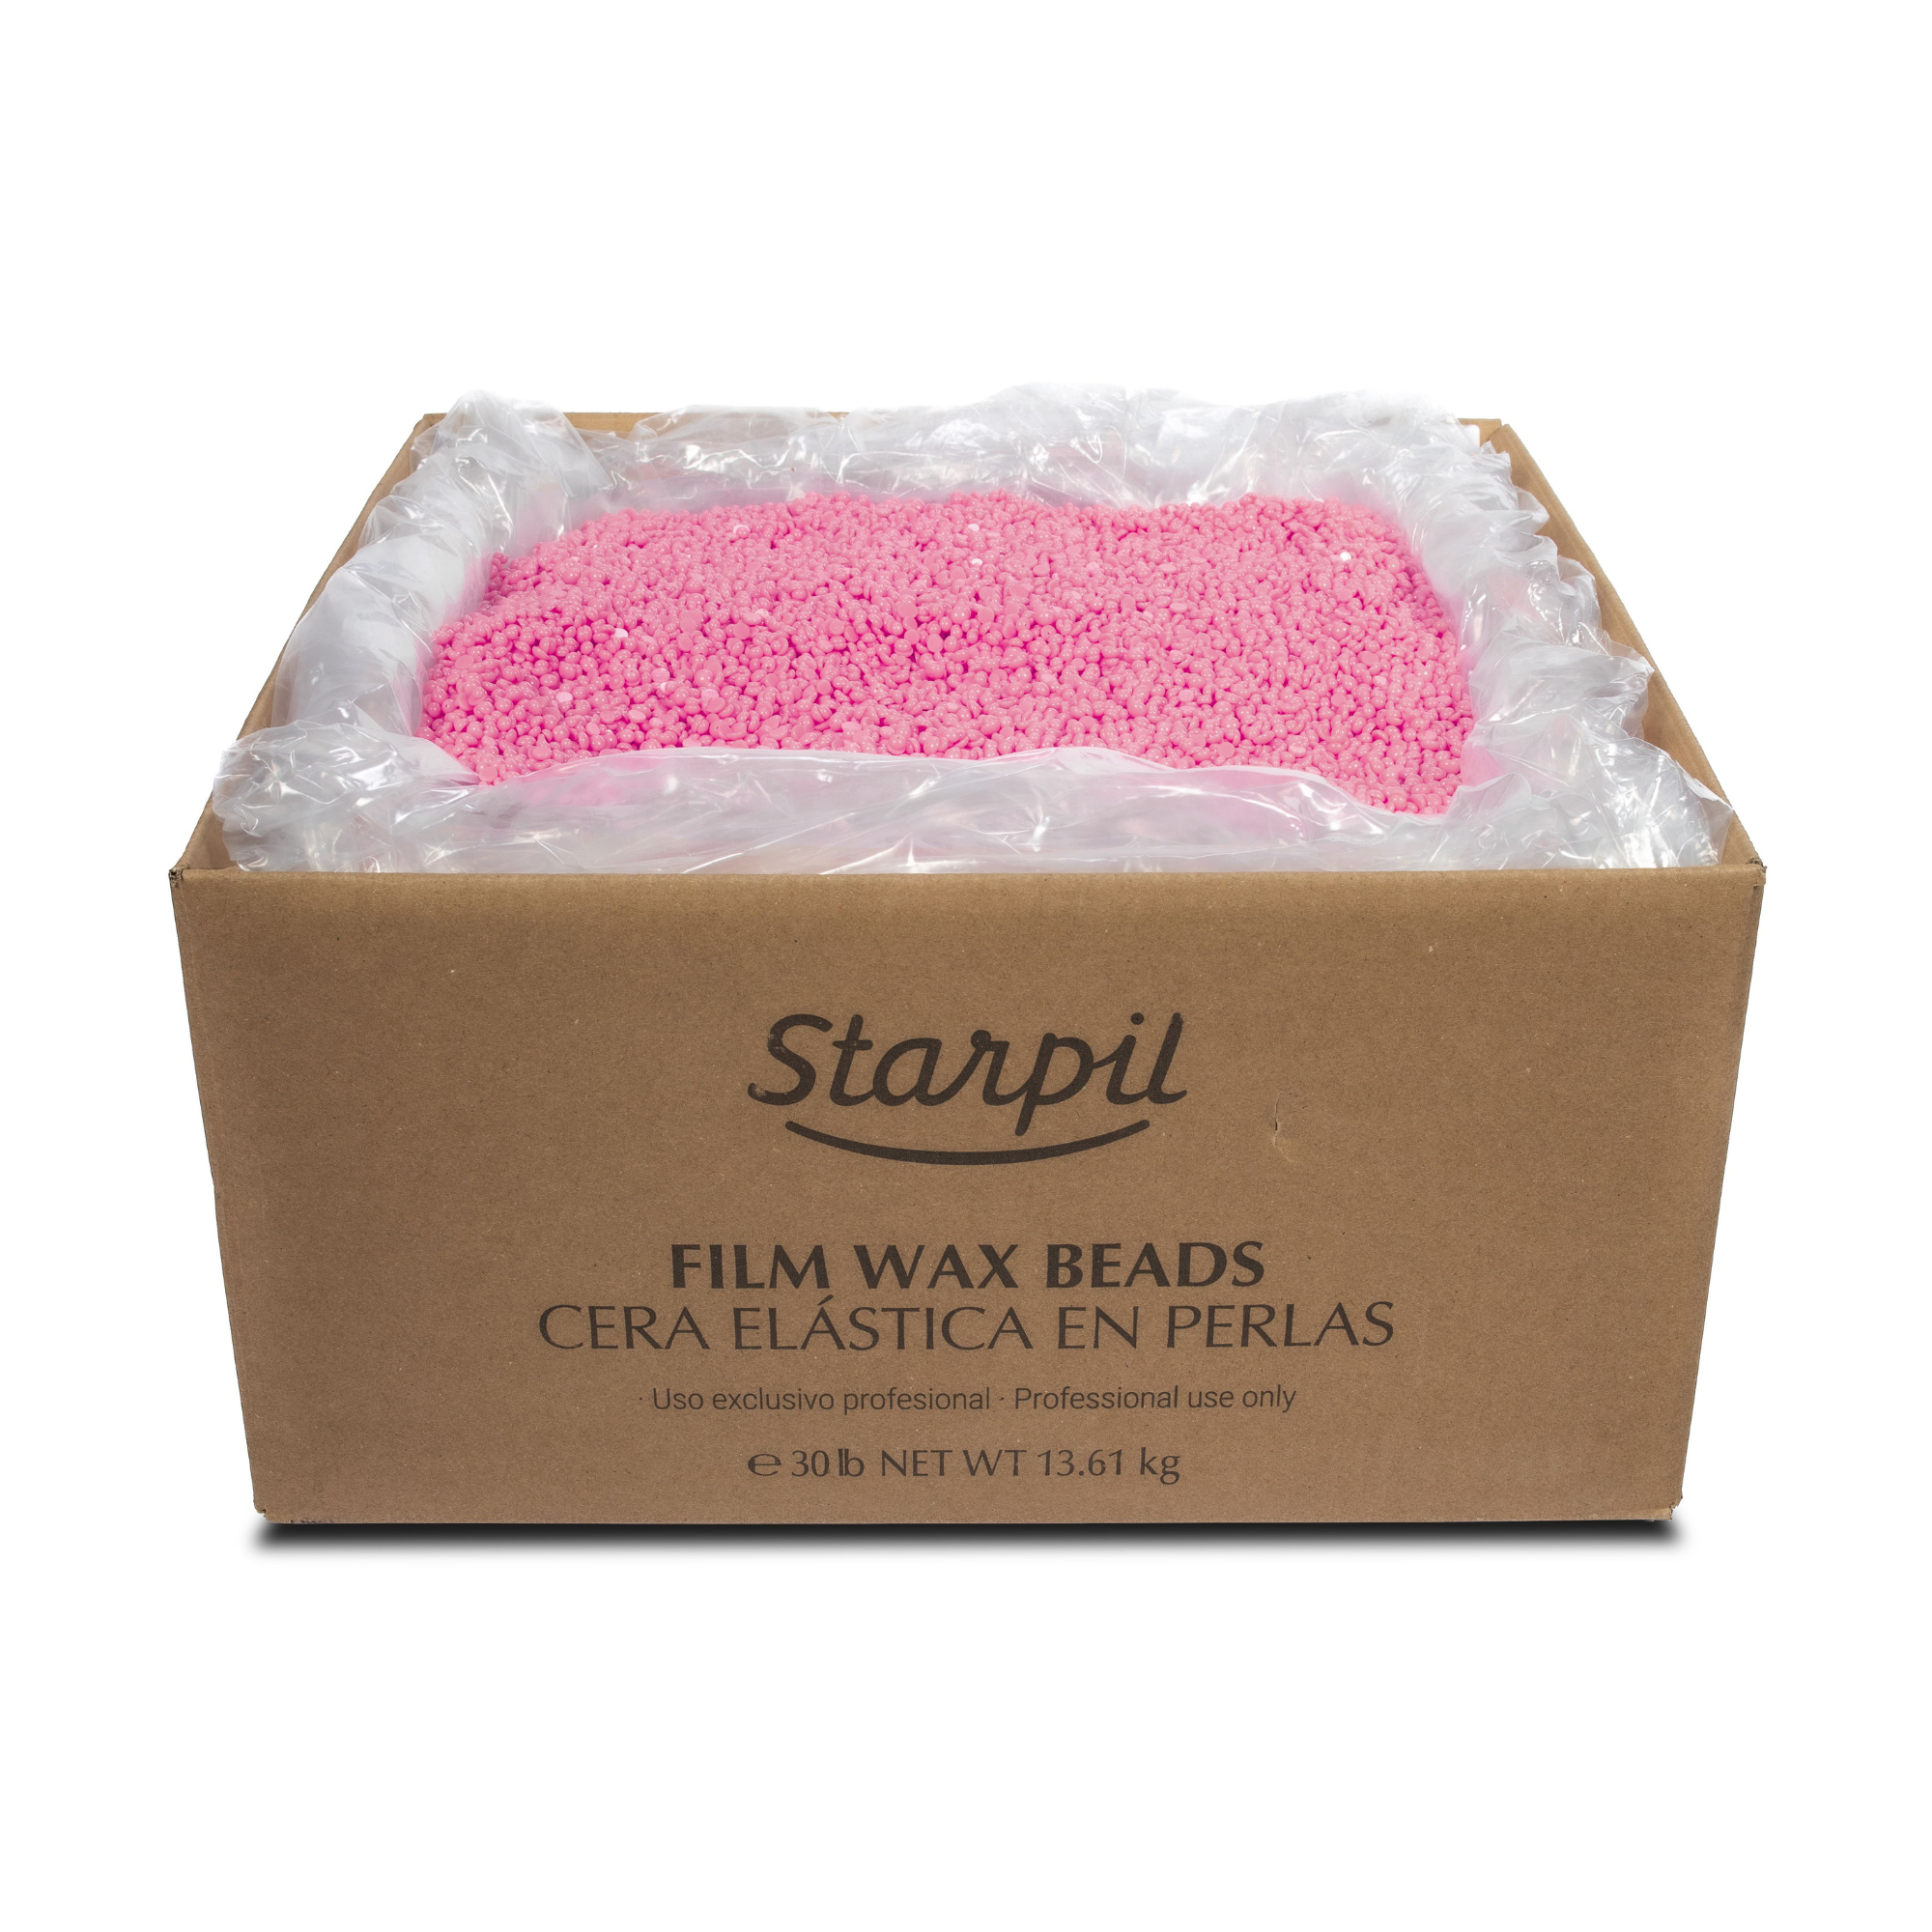 NEW Pink Film Hard Wax Beads - Rosin Free 30lb